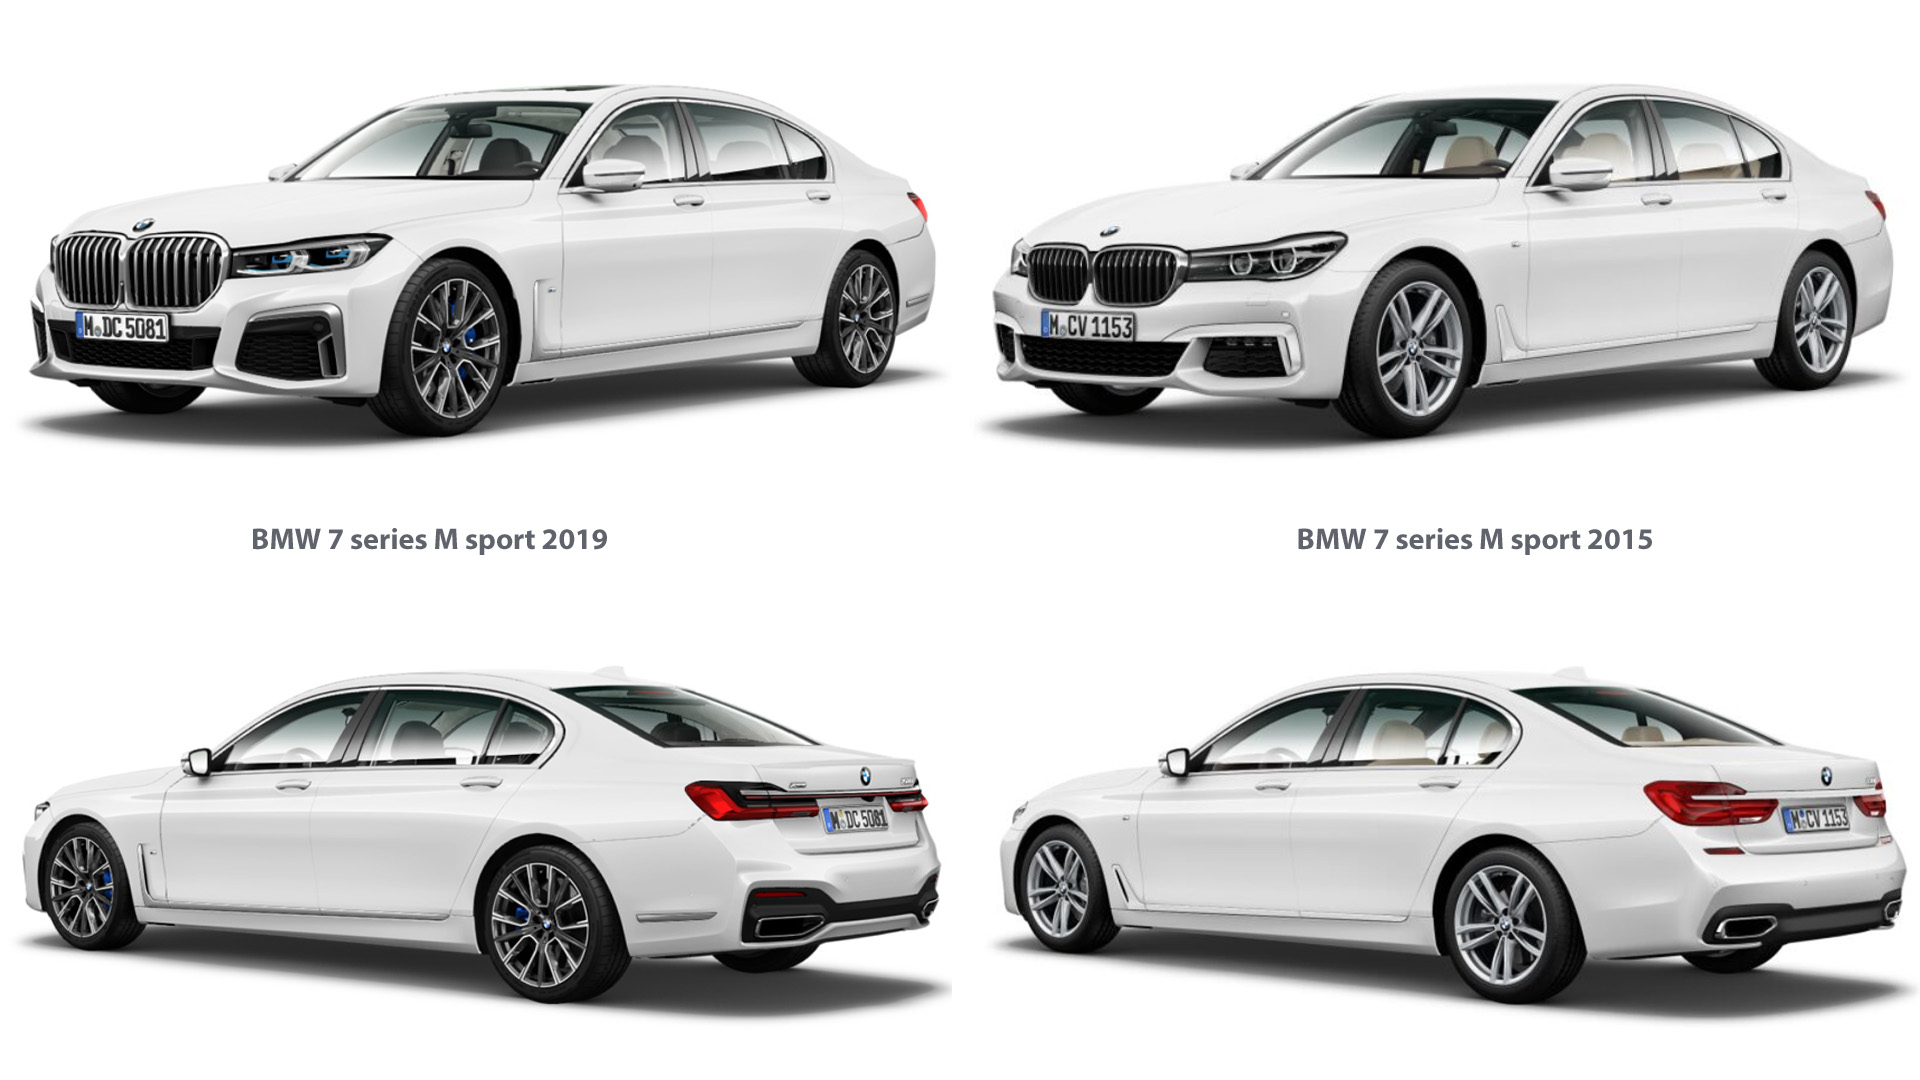 BMW 7 series M sport 2019